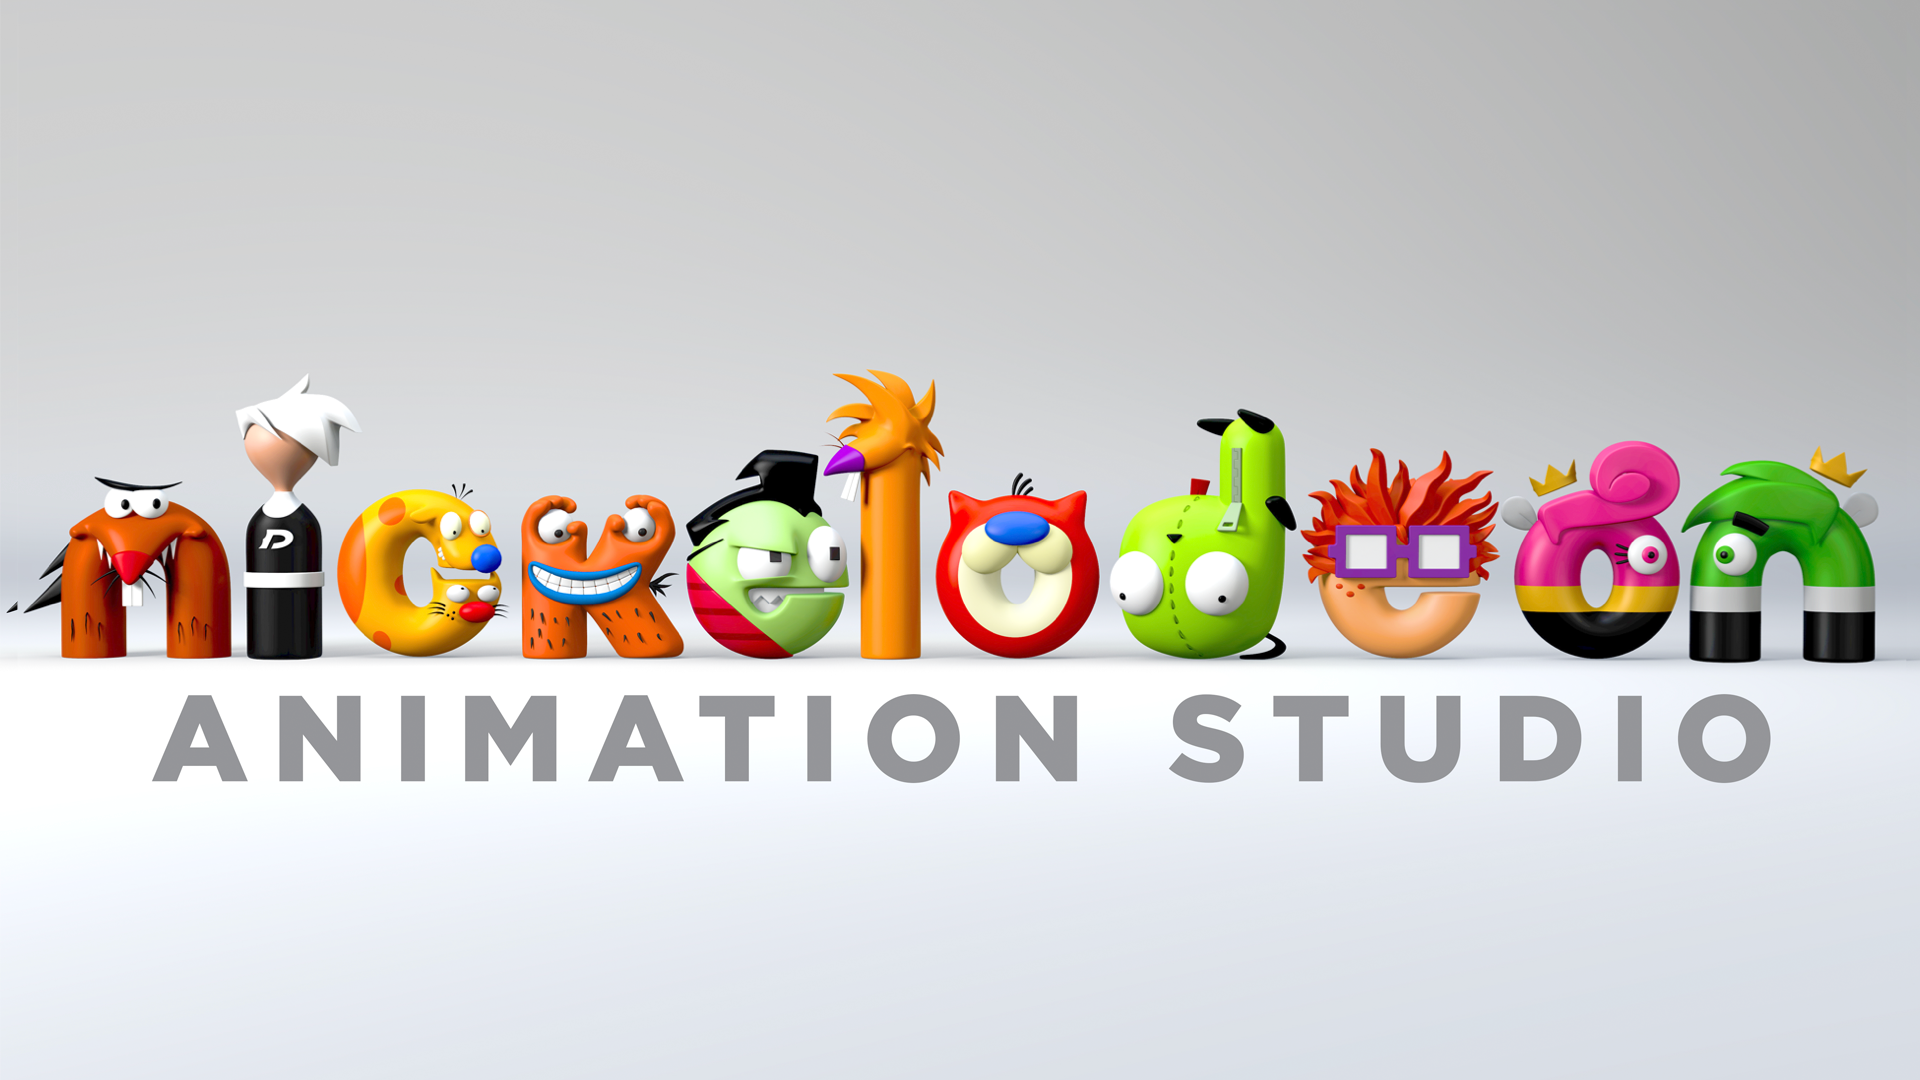 Nickelodeon animation studio. Студия Никелодеон. Никелодеон анимейшен студио. Никелодеон Студиос. Никелодеон анимация студия.